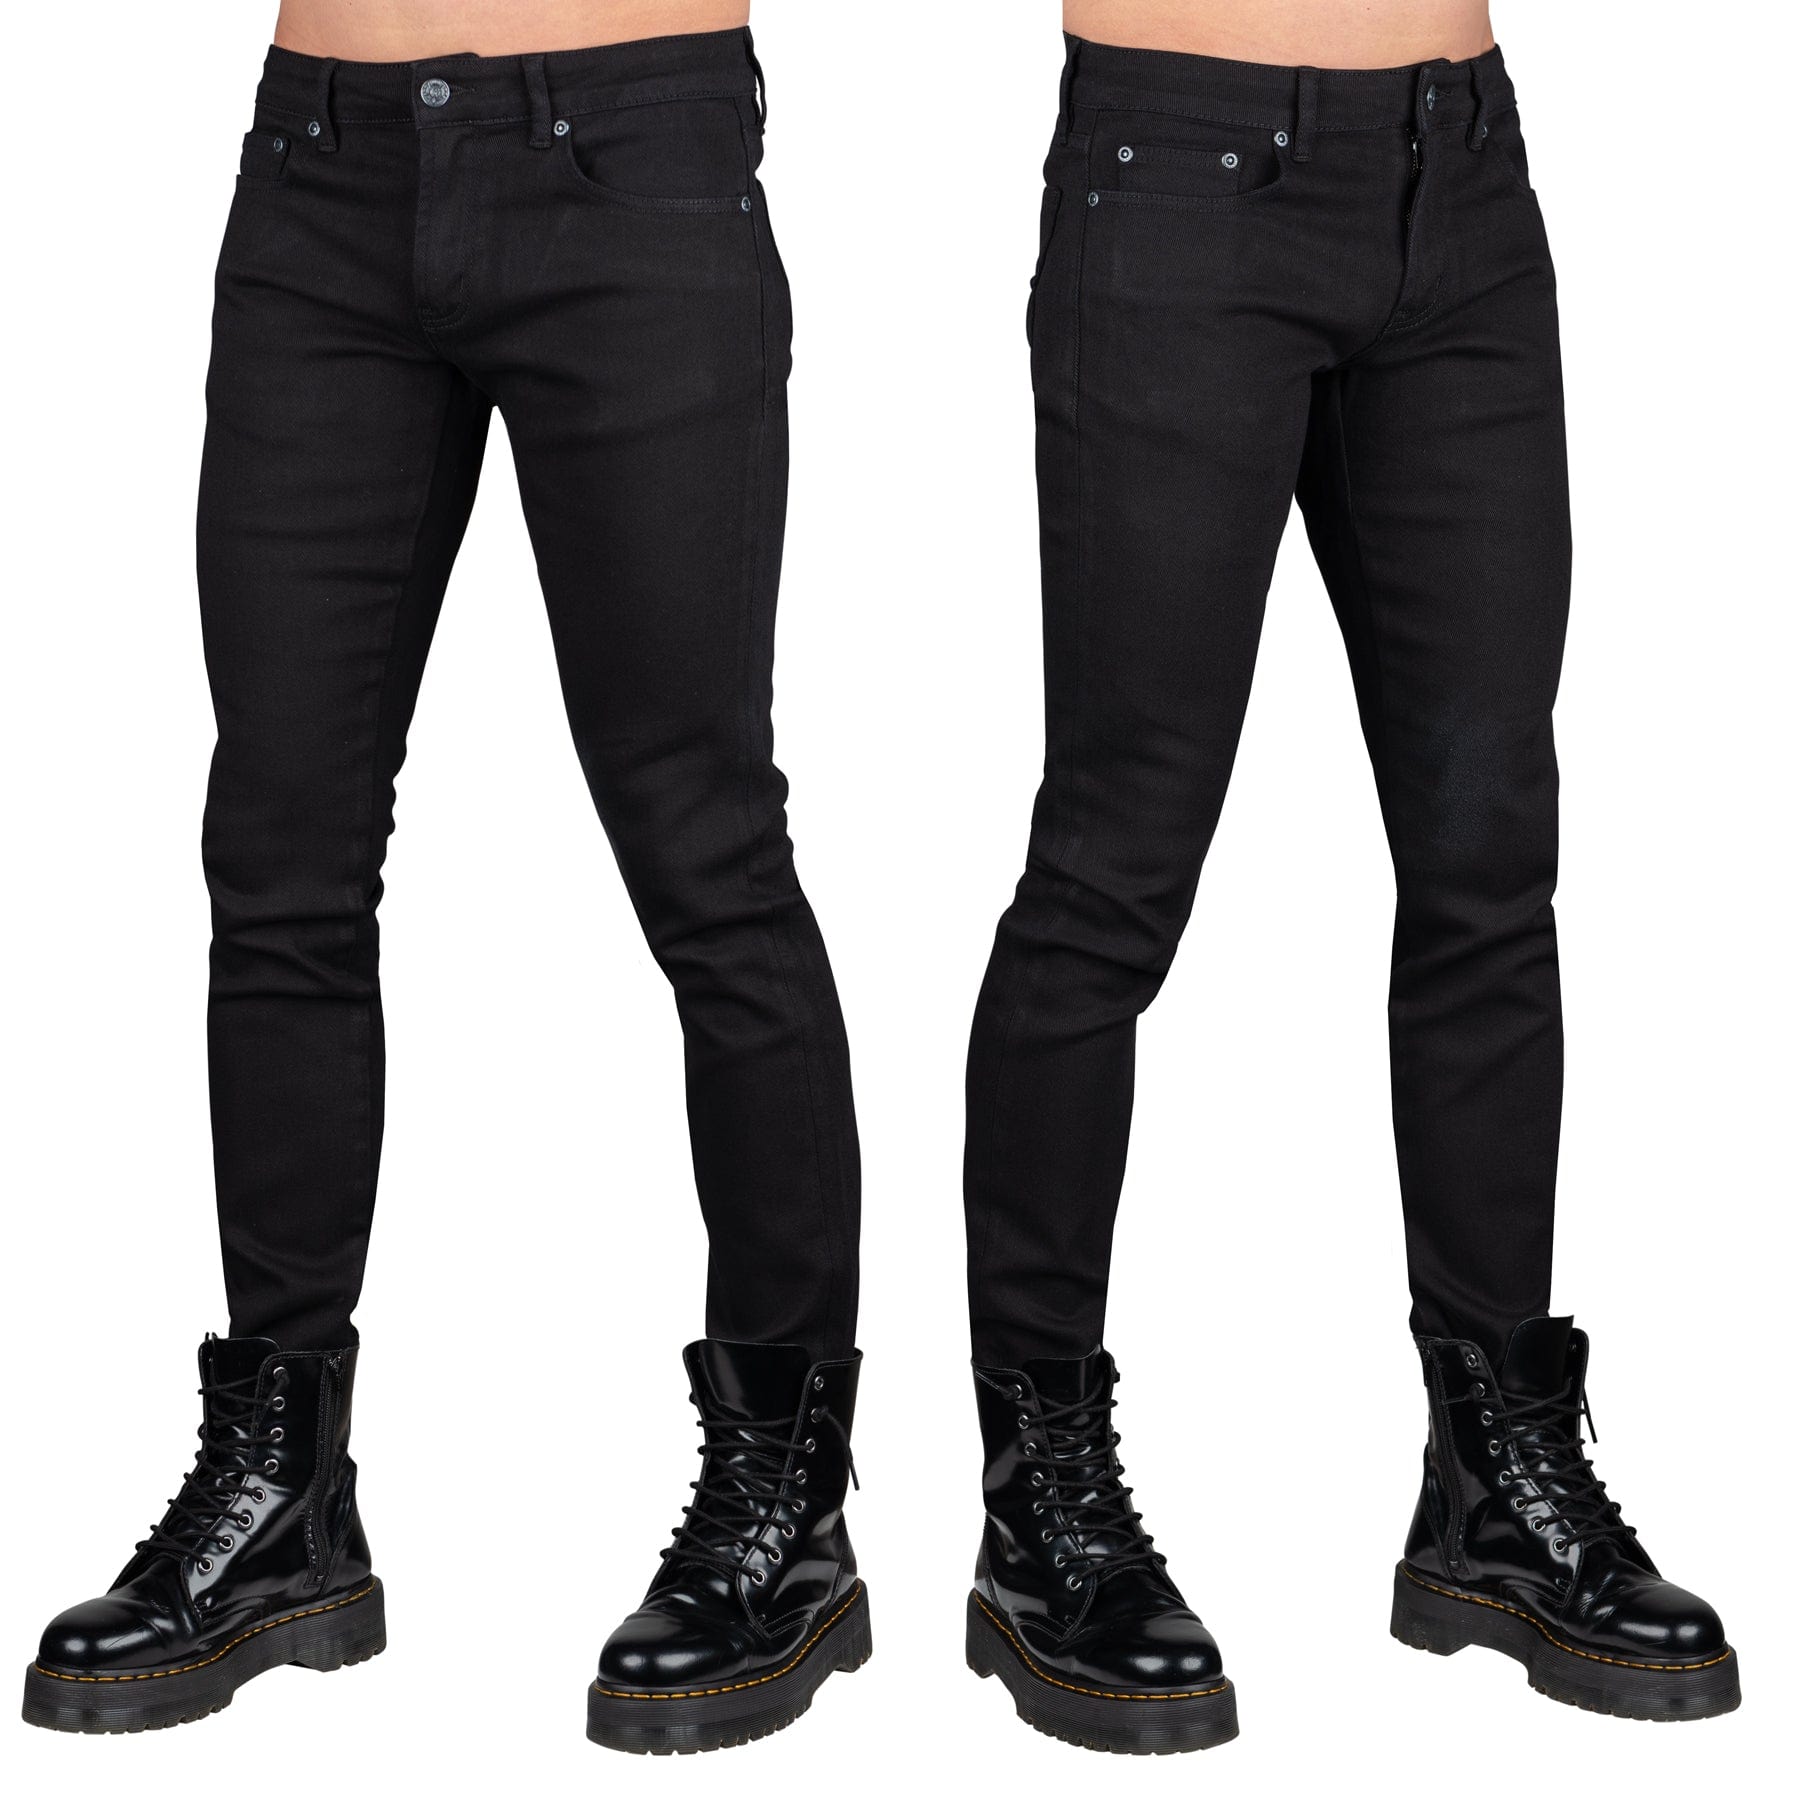 Wornstar Clothing Mens Jeans. Rampager Denim Jeans - Black